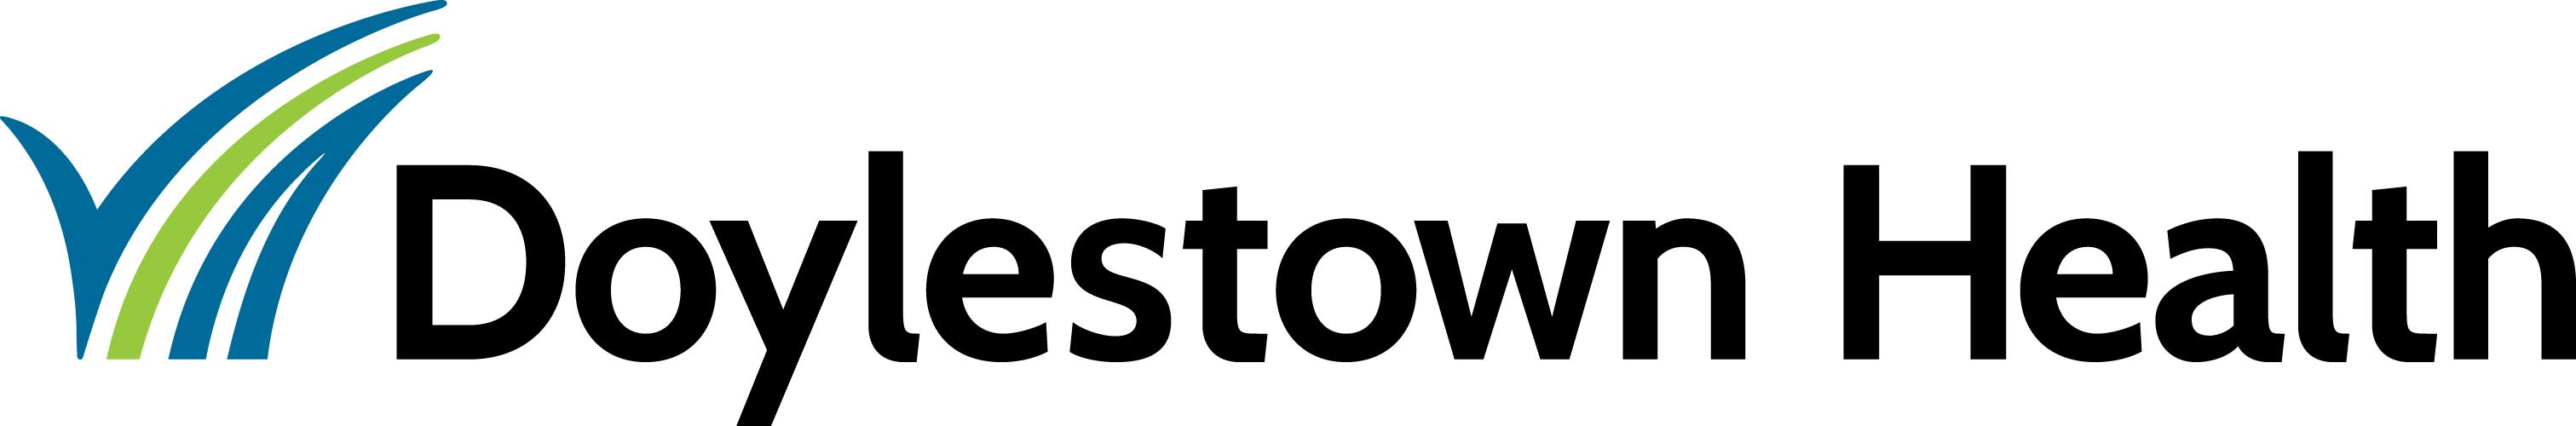 Doylestown Logo - Home Cares Educational Foundation